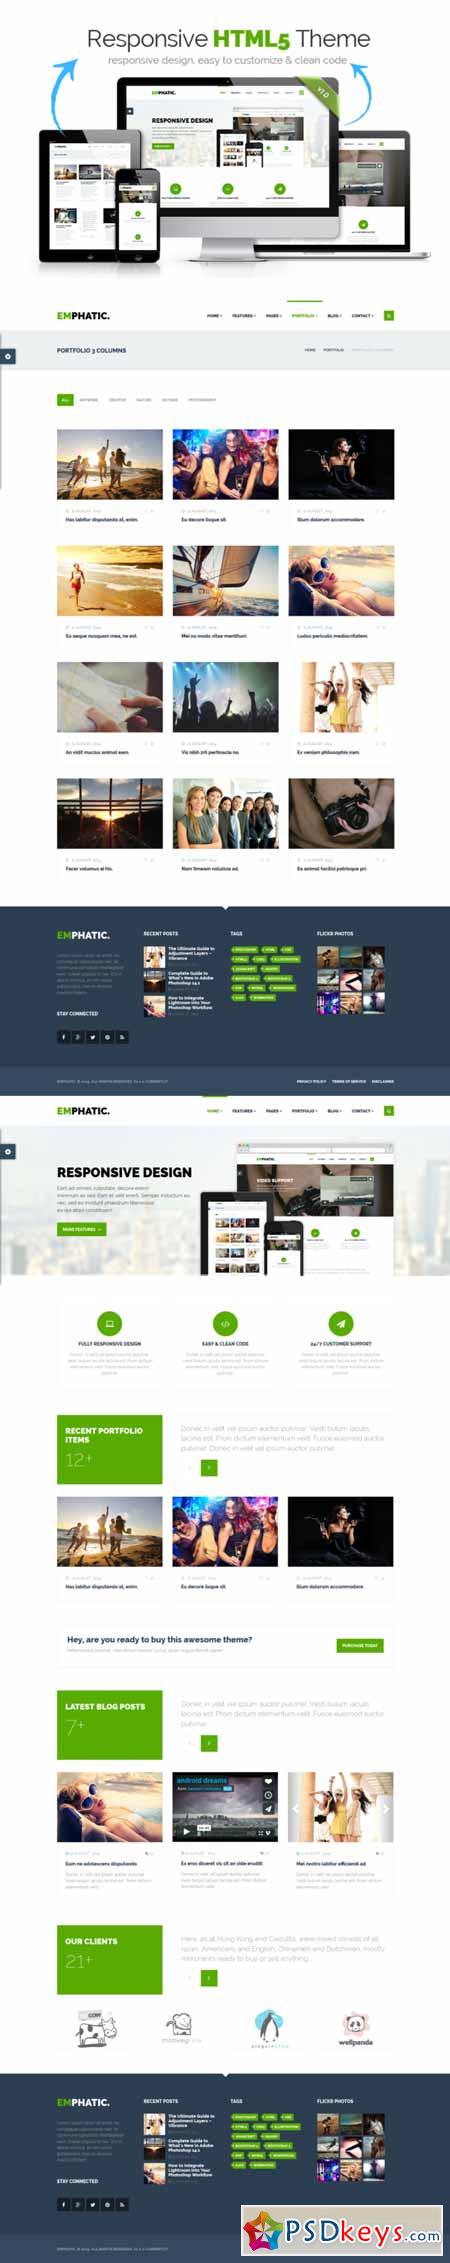 Emphatic - Responsive HTML5 Theme 83453